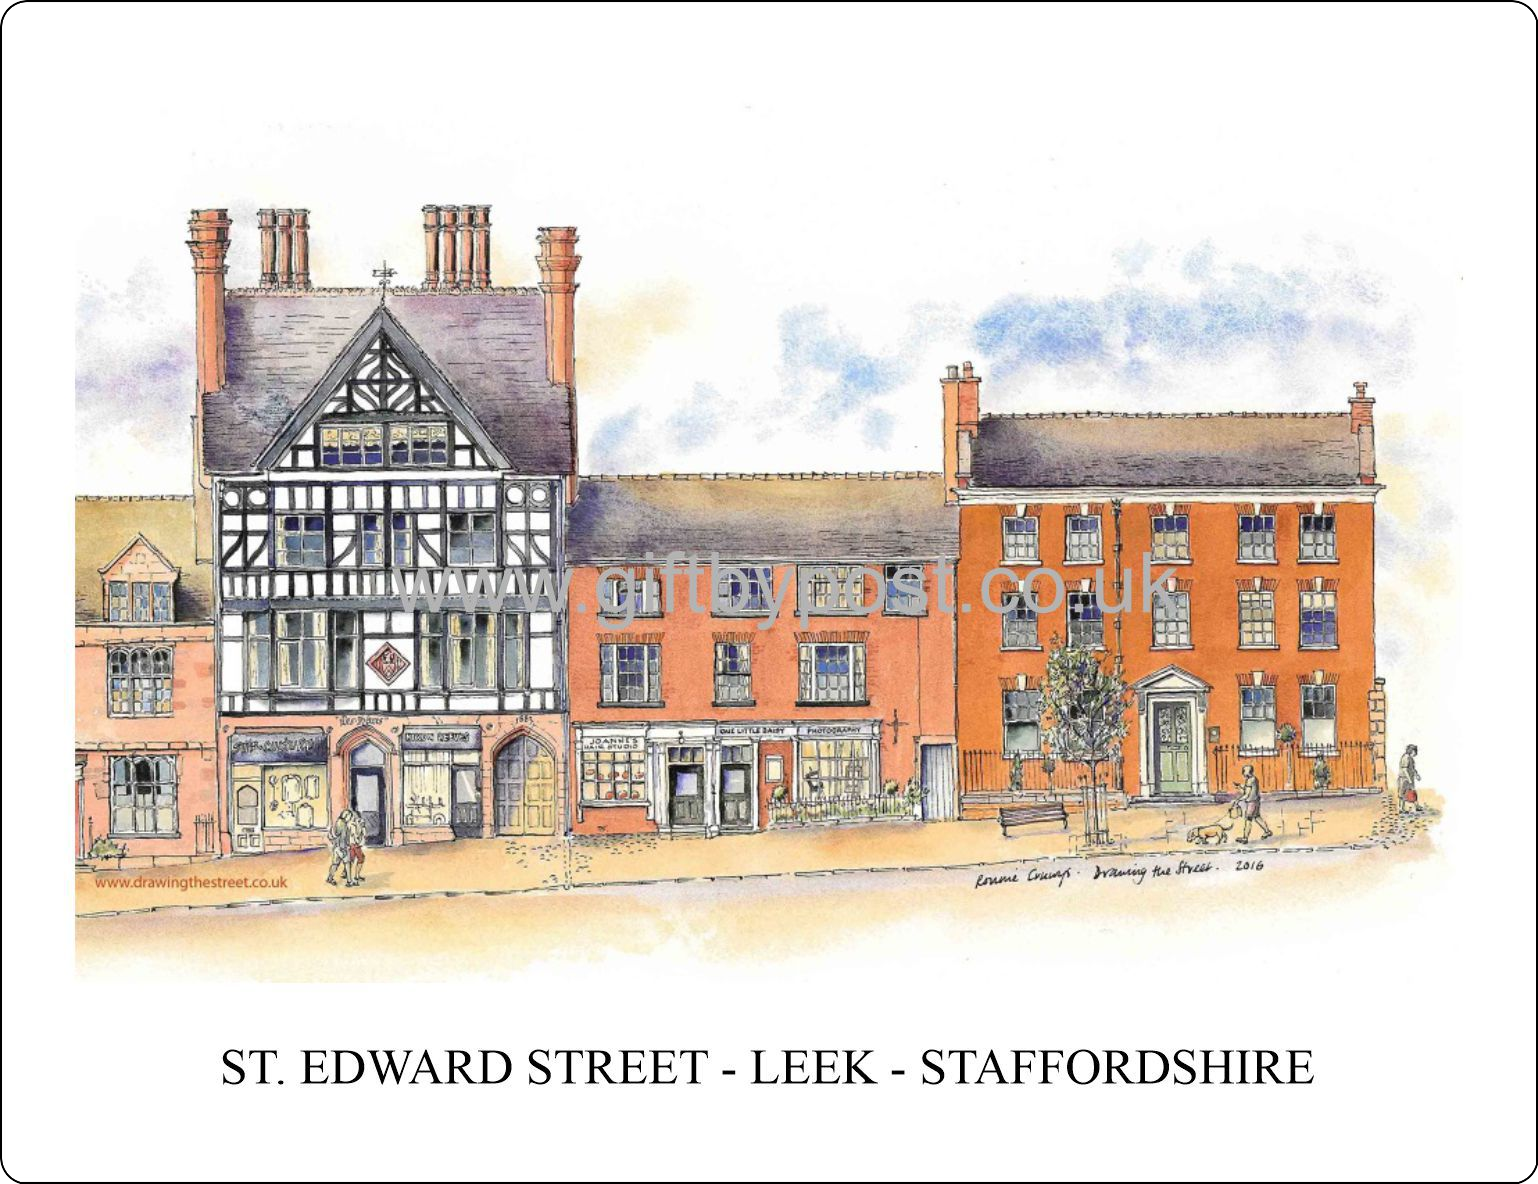 Placemat - Leek Staffordshire - St. Edward Street (3)